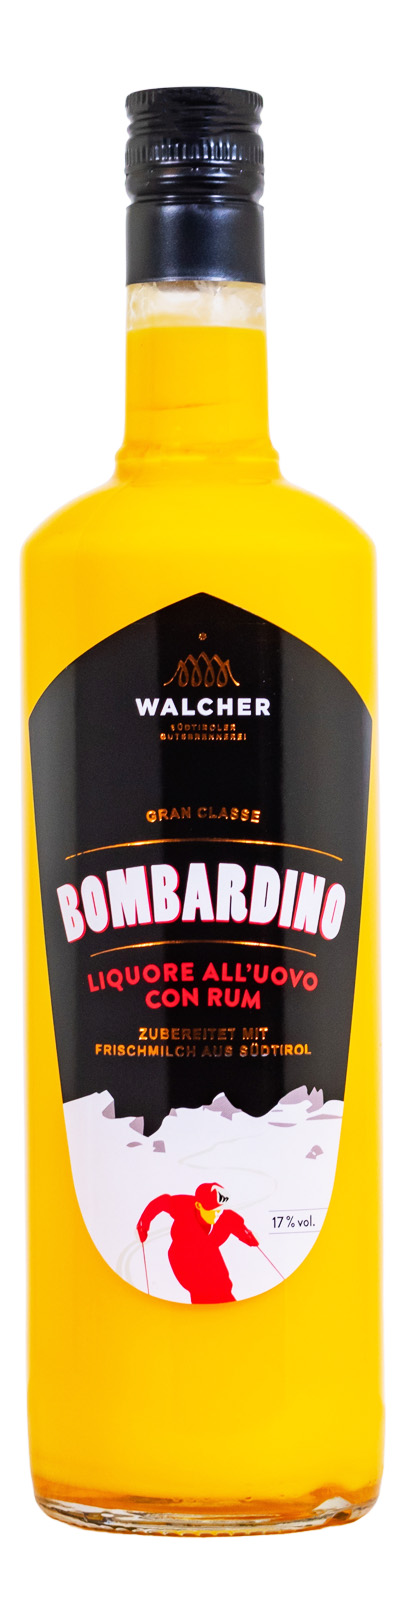 Walcher Bombardino Classic günstig kaufen (1L)